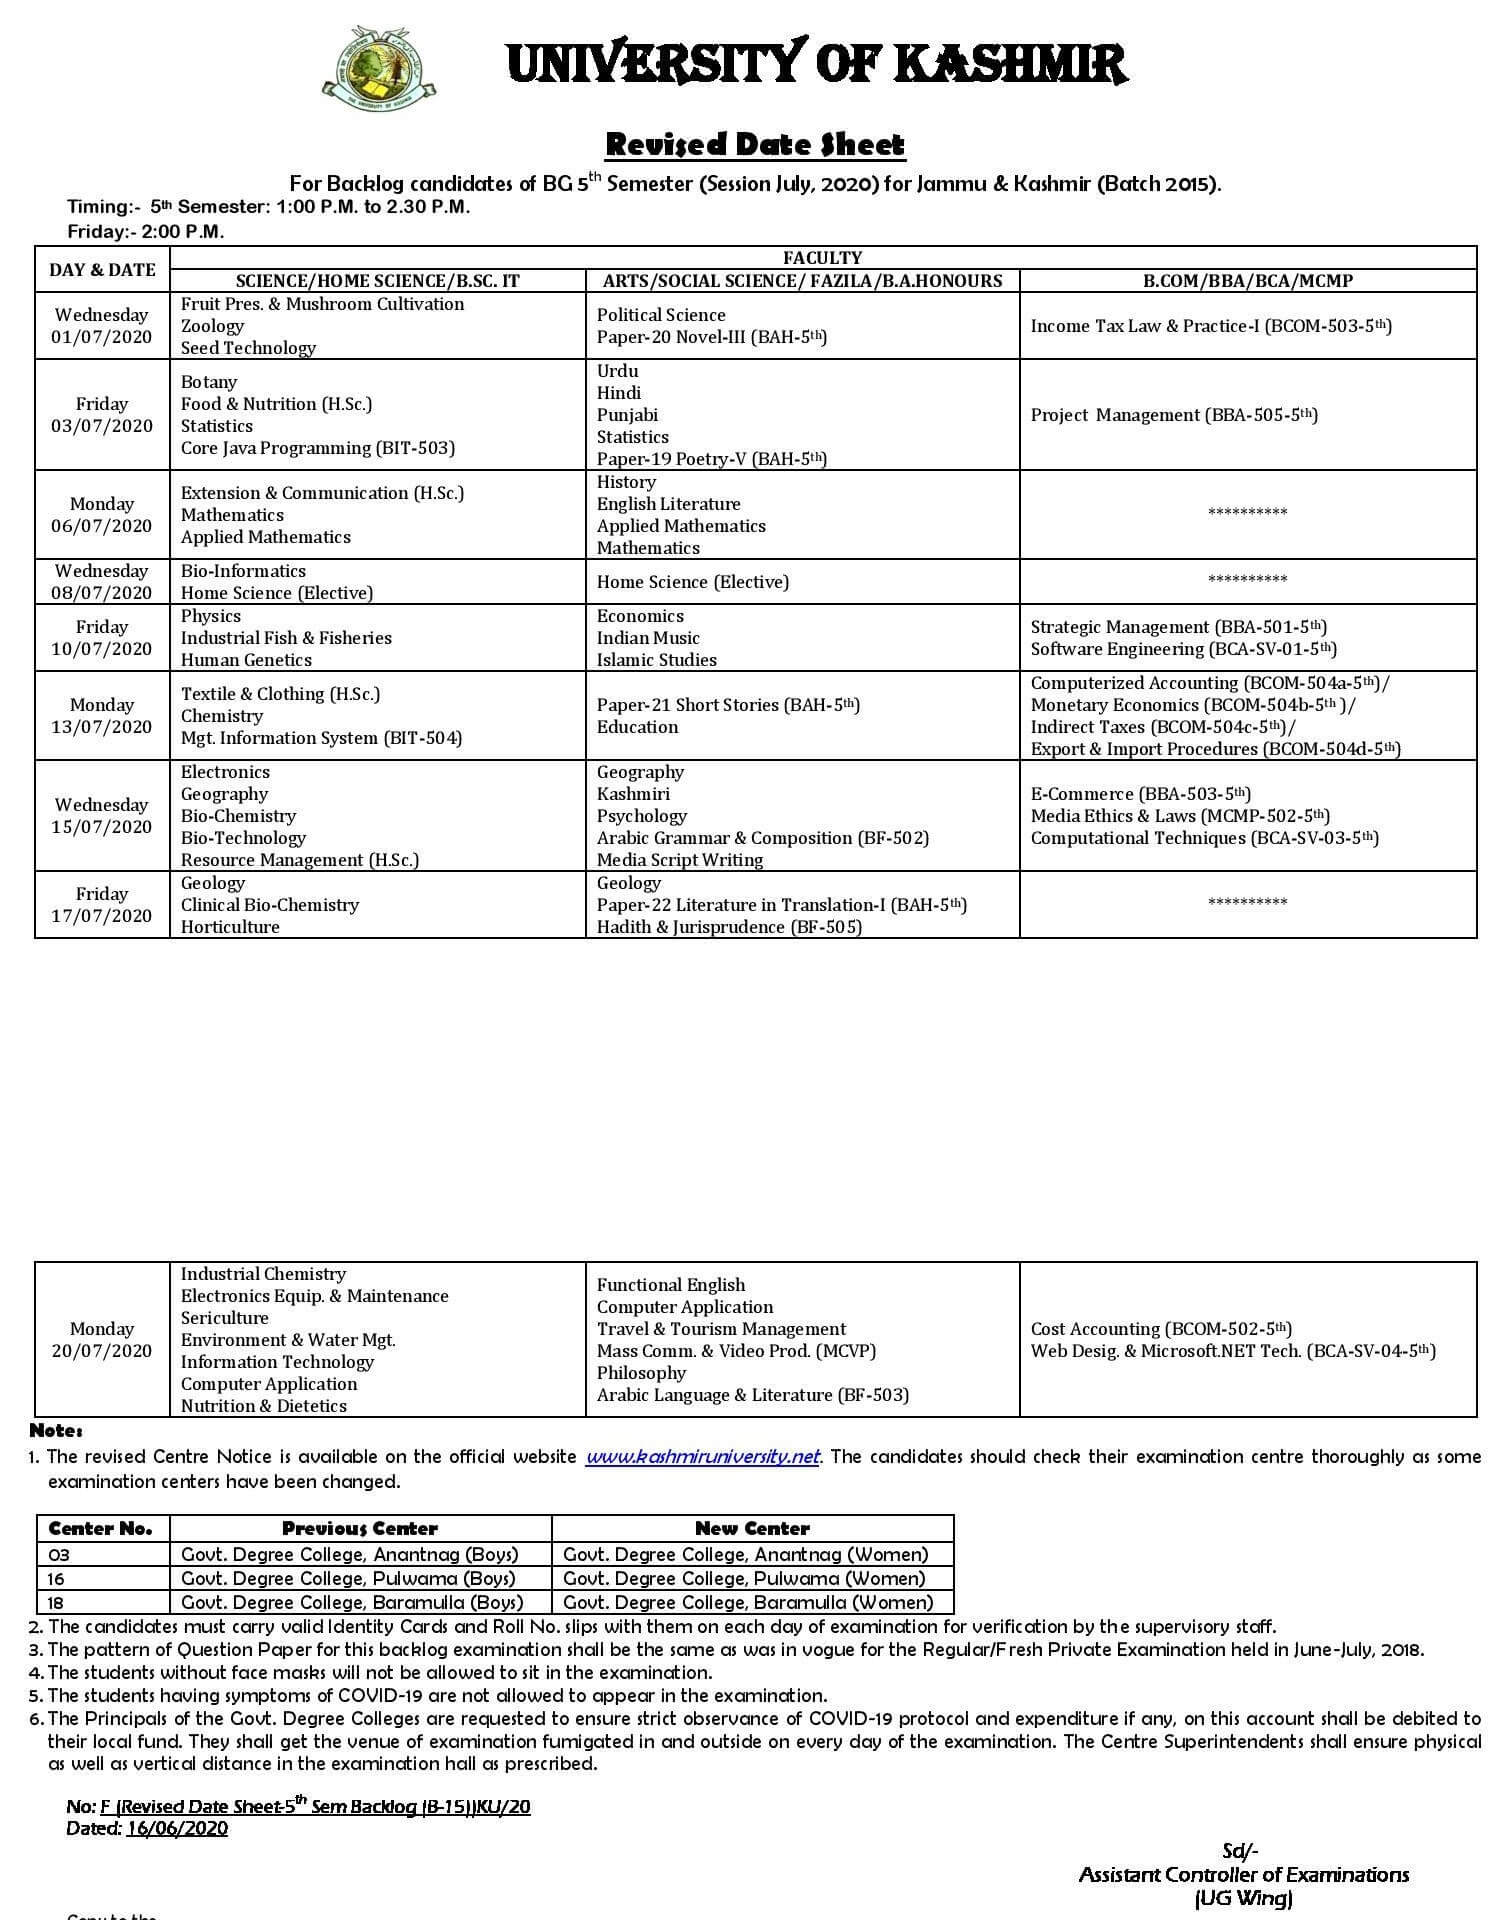 KU Revised Date Sheet for BG 5th Semester (Backlog; Batch 2015)